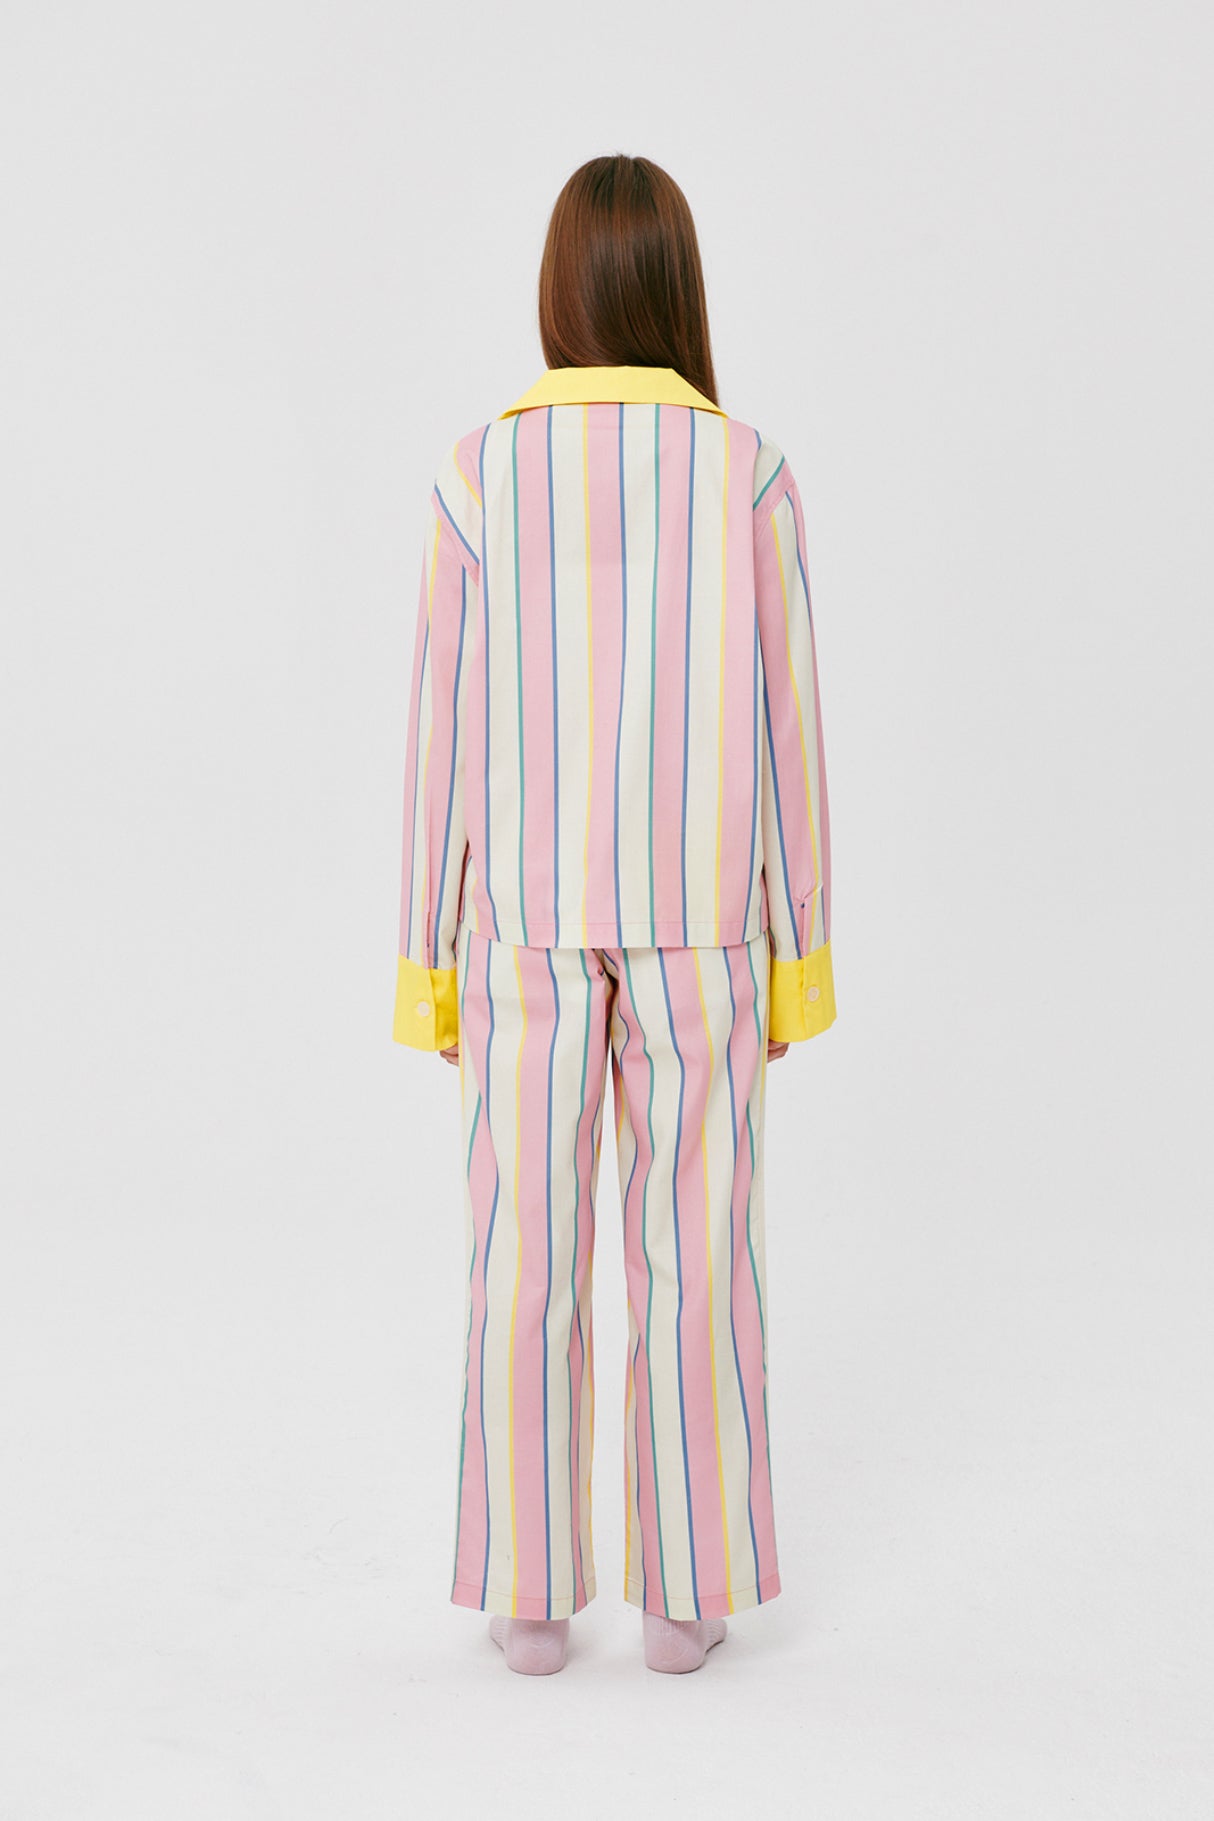 Creamy Stripe Loungewear Set by Foli